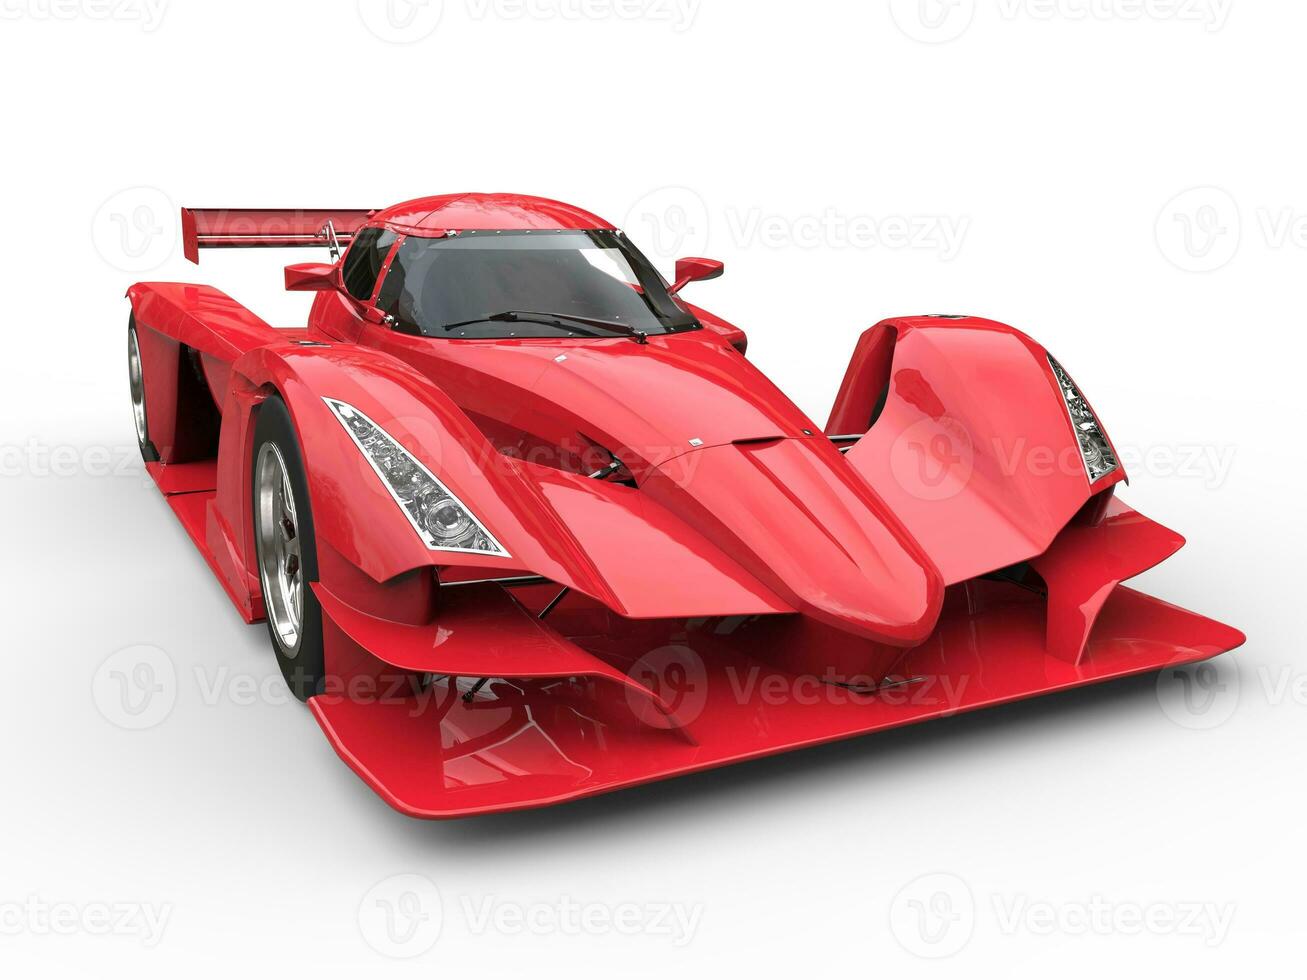 Bravo vermelho super raça carro foto